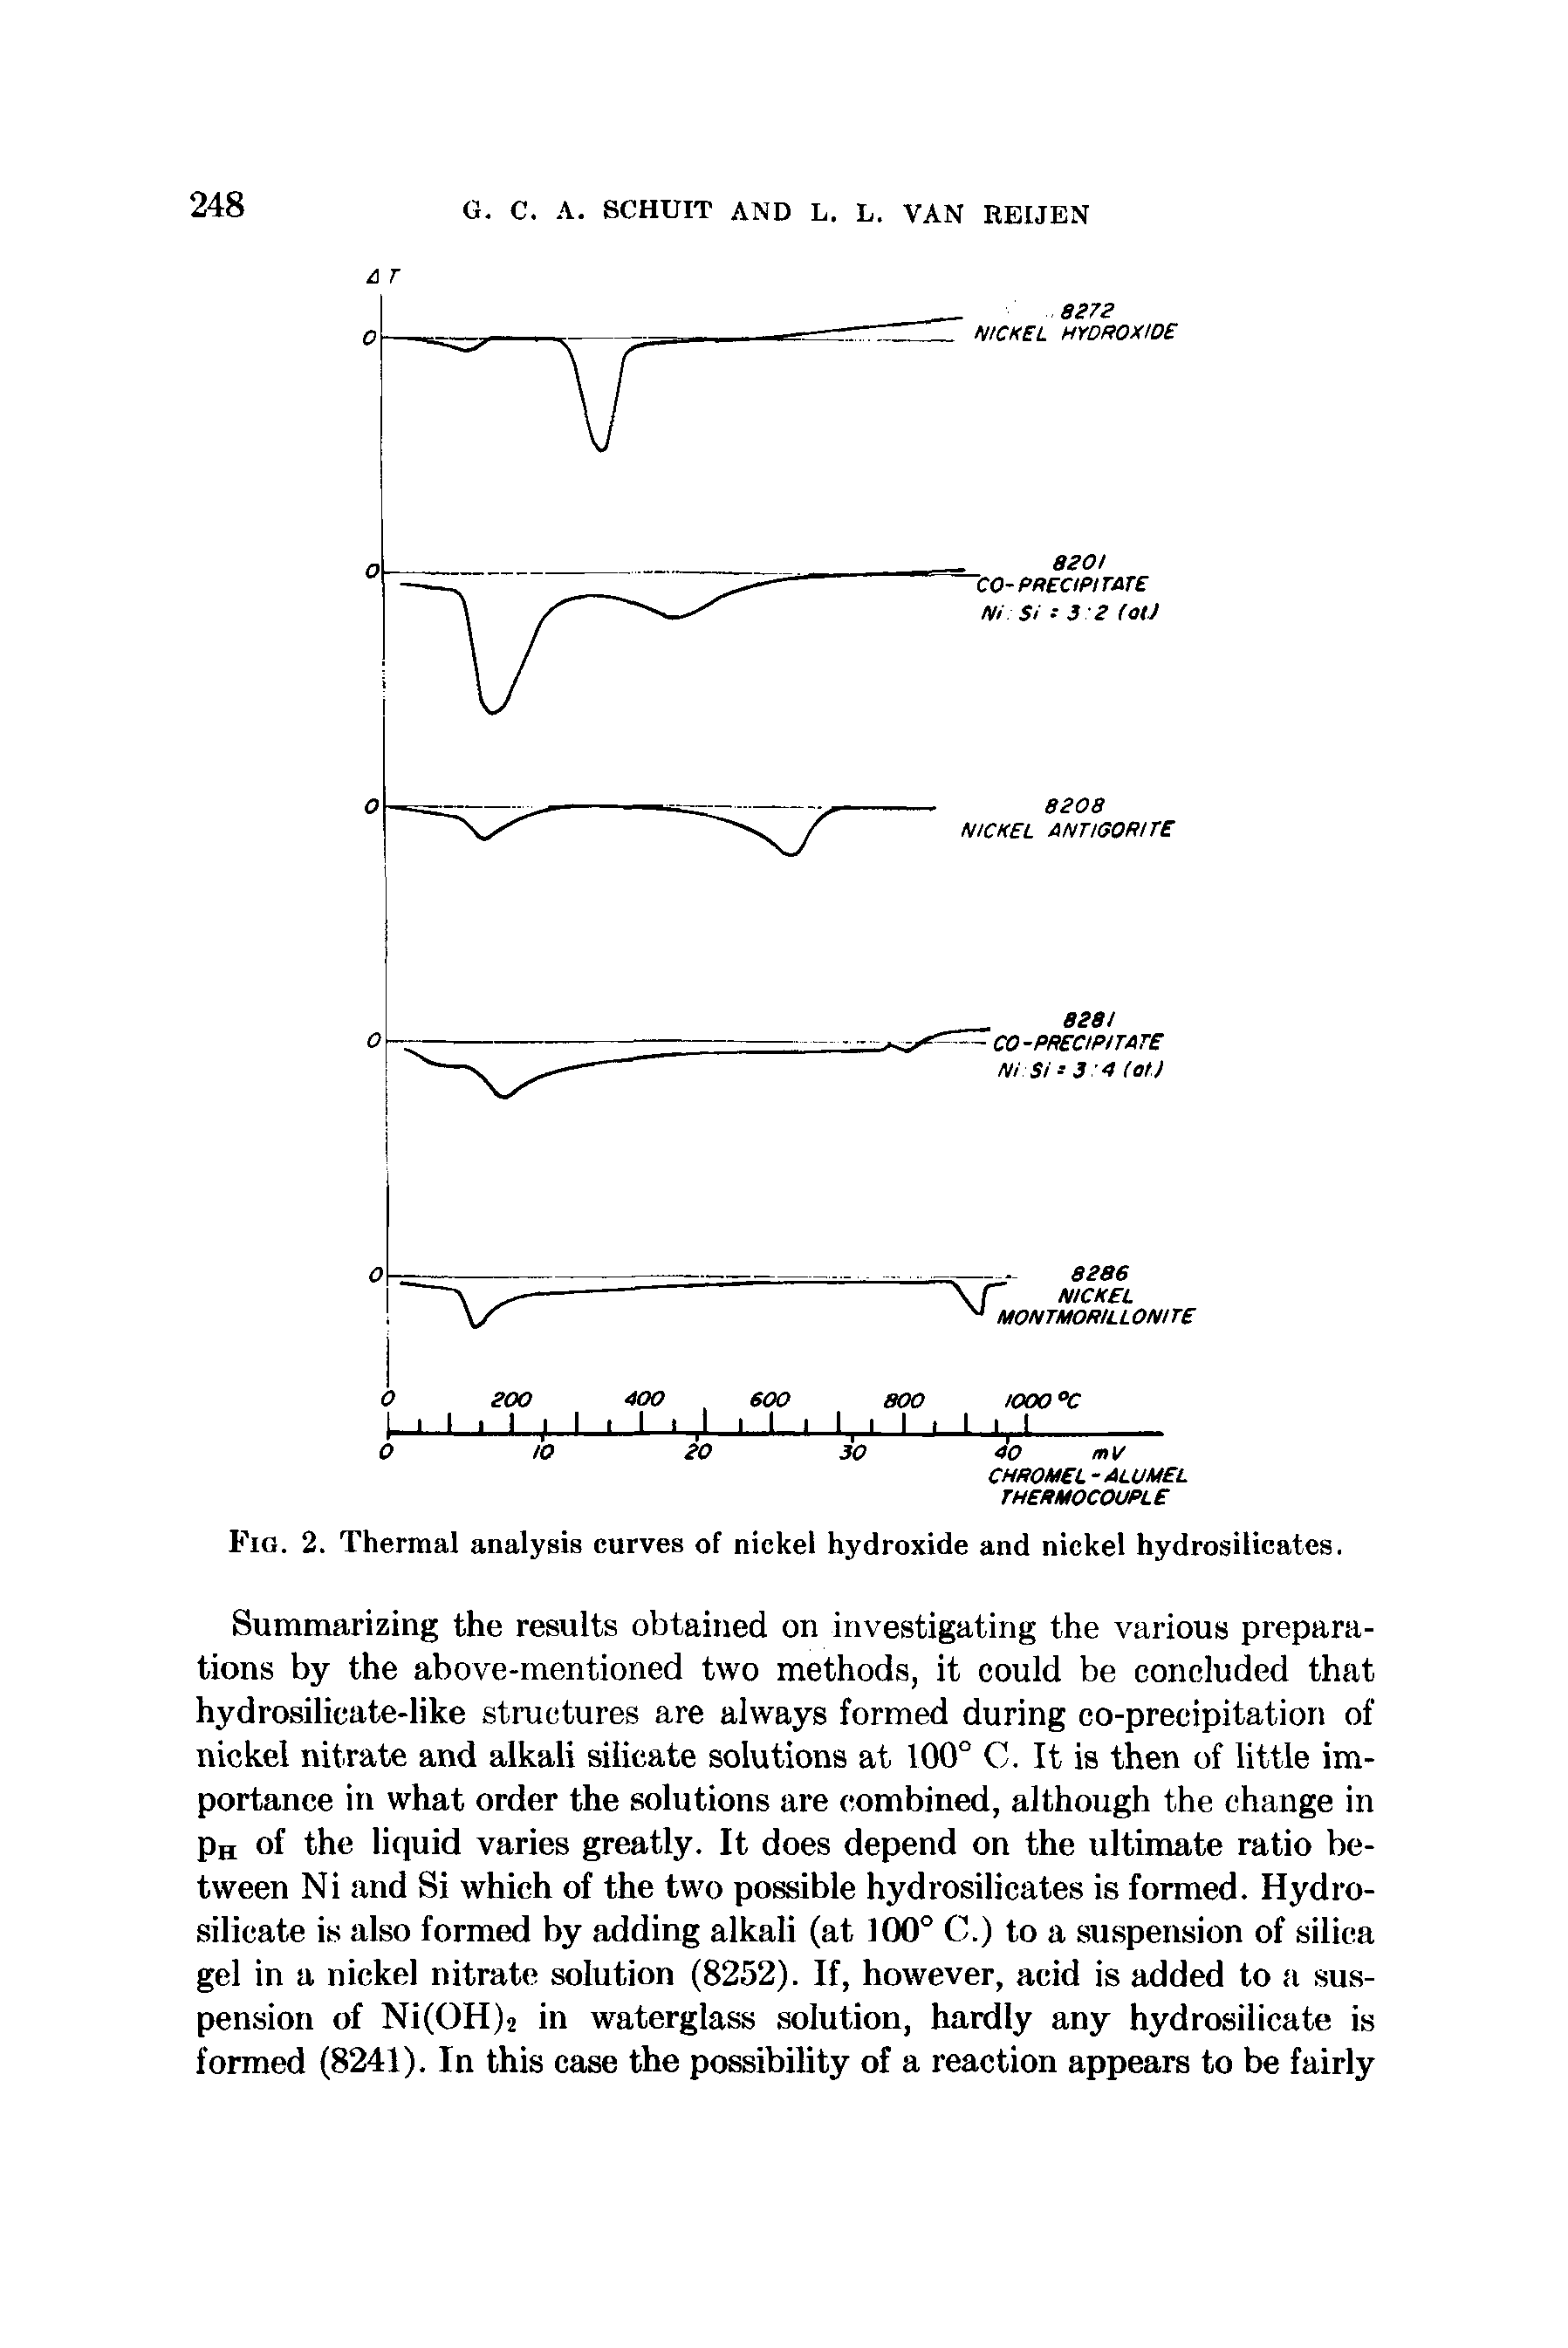 Fig. 2. Thermal analysis curves of nickel hydroxide and nickel hydrosilicates.